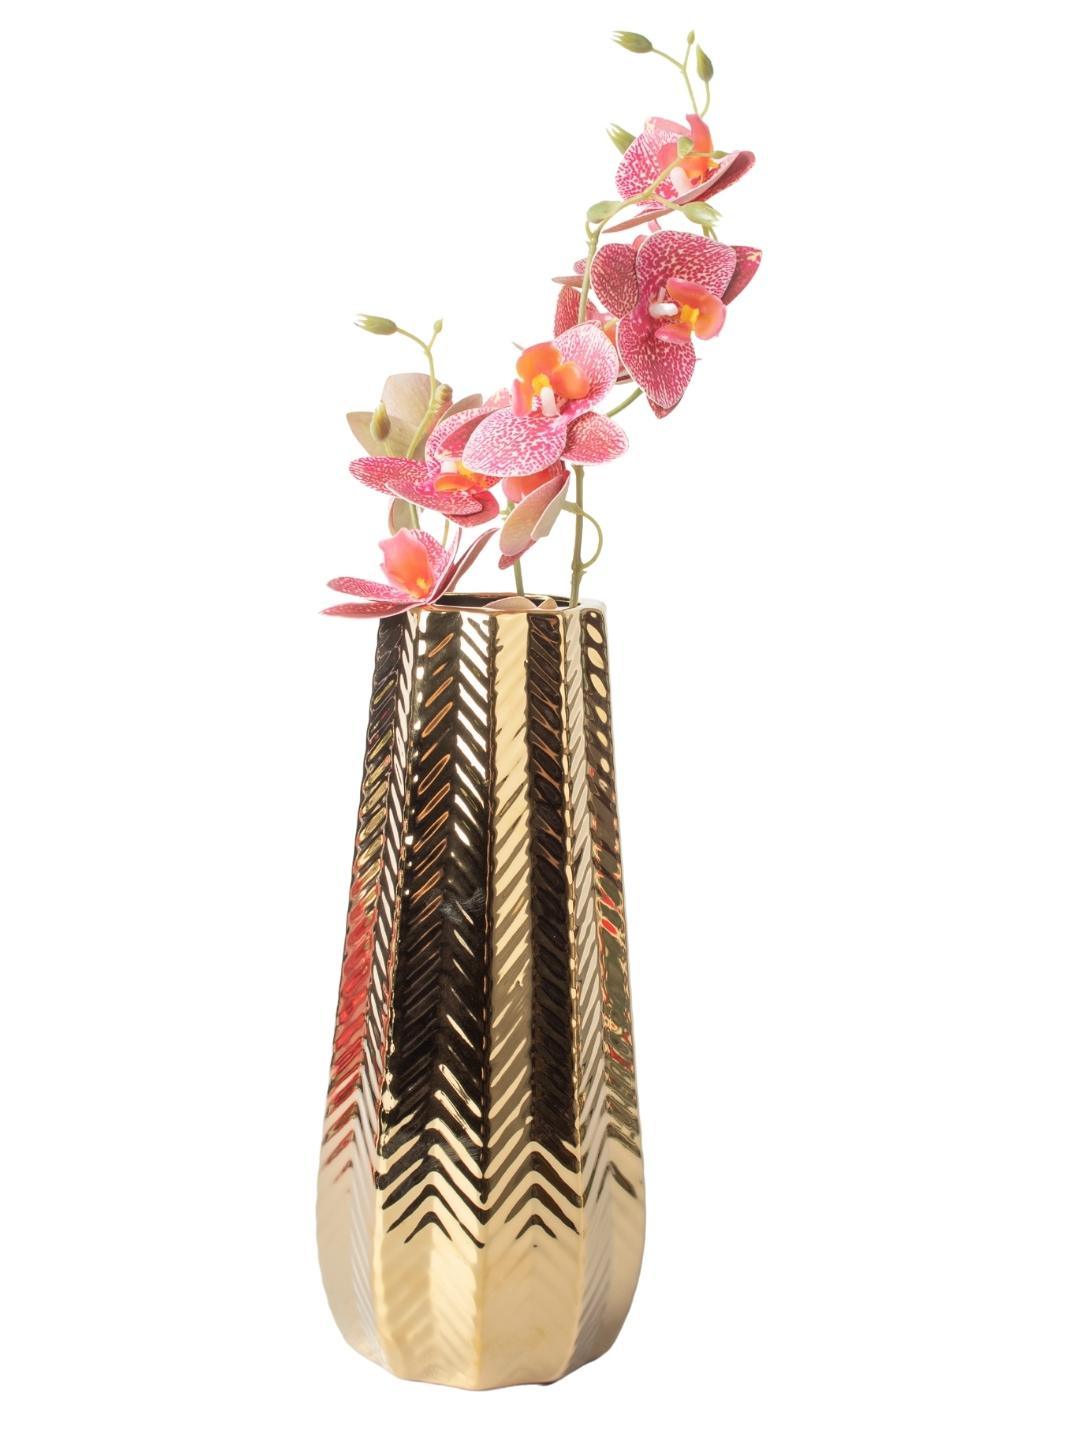 Decorative Ceramic Flower Vase - Golden Cyclinderical, Glossy